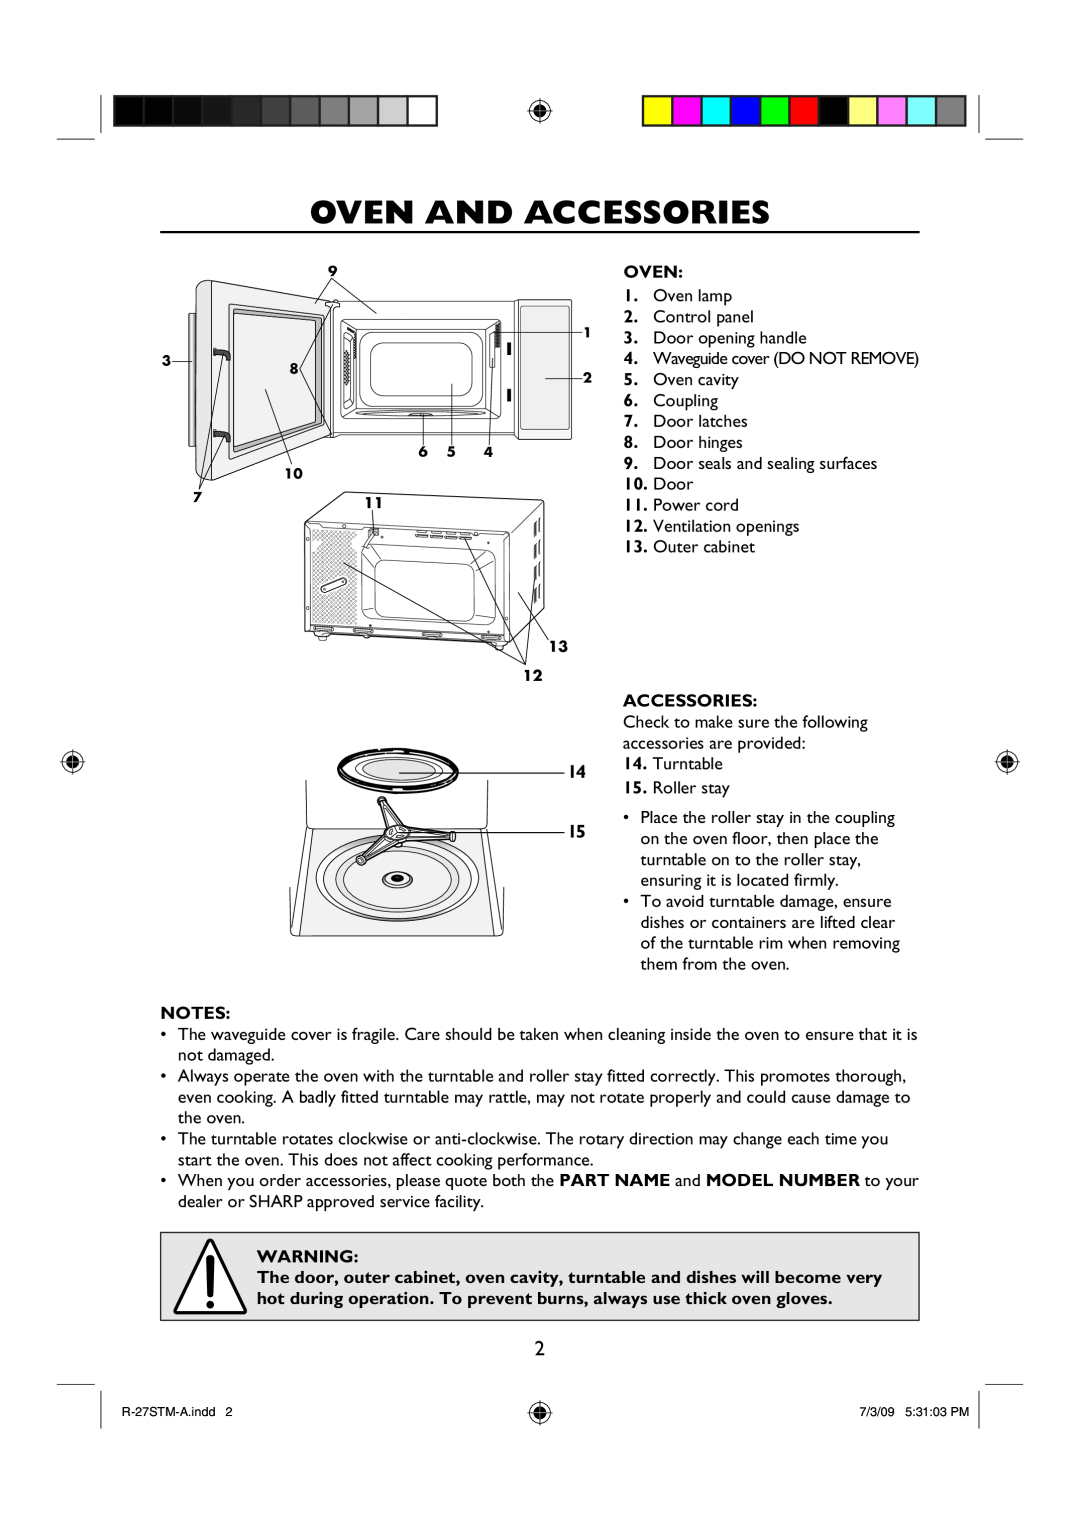 Sharp R-27STM-A Oven And Accessories, Oven lamp, Control panel, Door opening handle, Oven cavity, Coupling, Door latches 